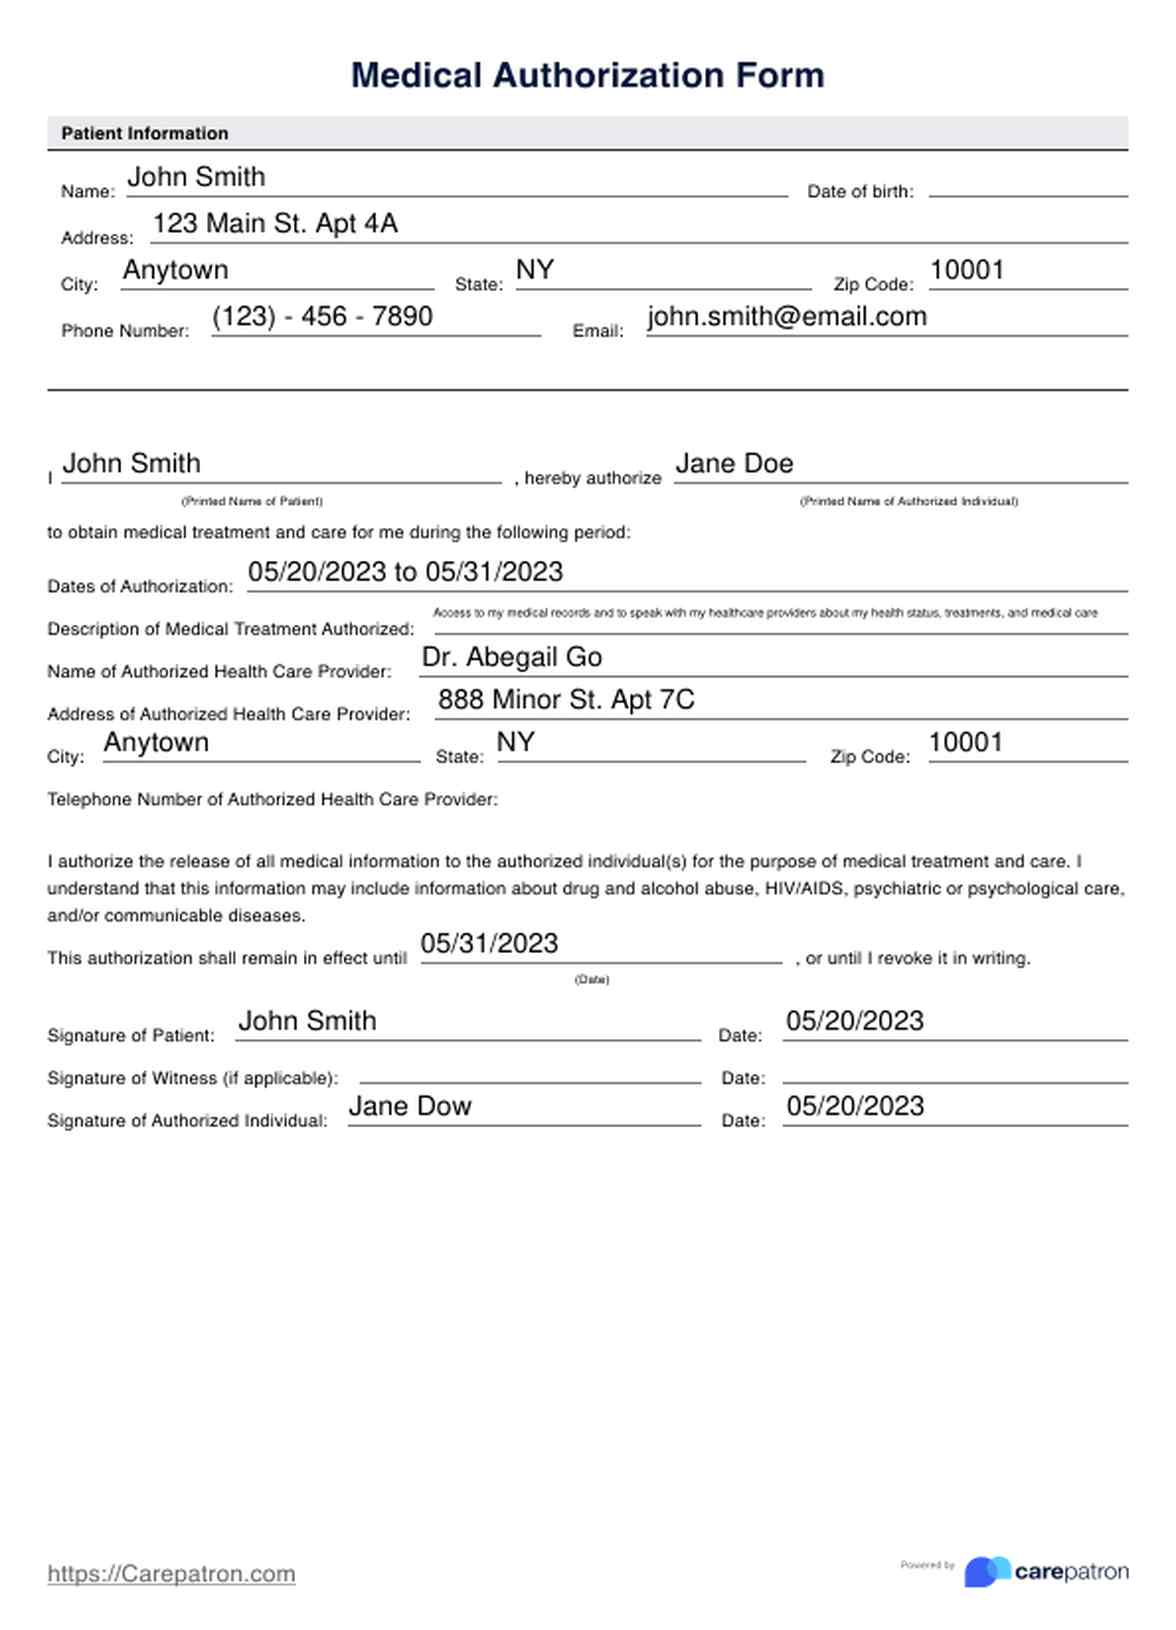 Medical Authorization Form PDF Example